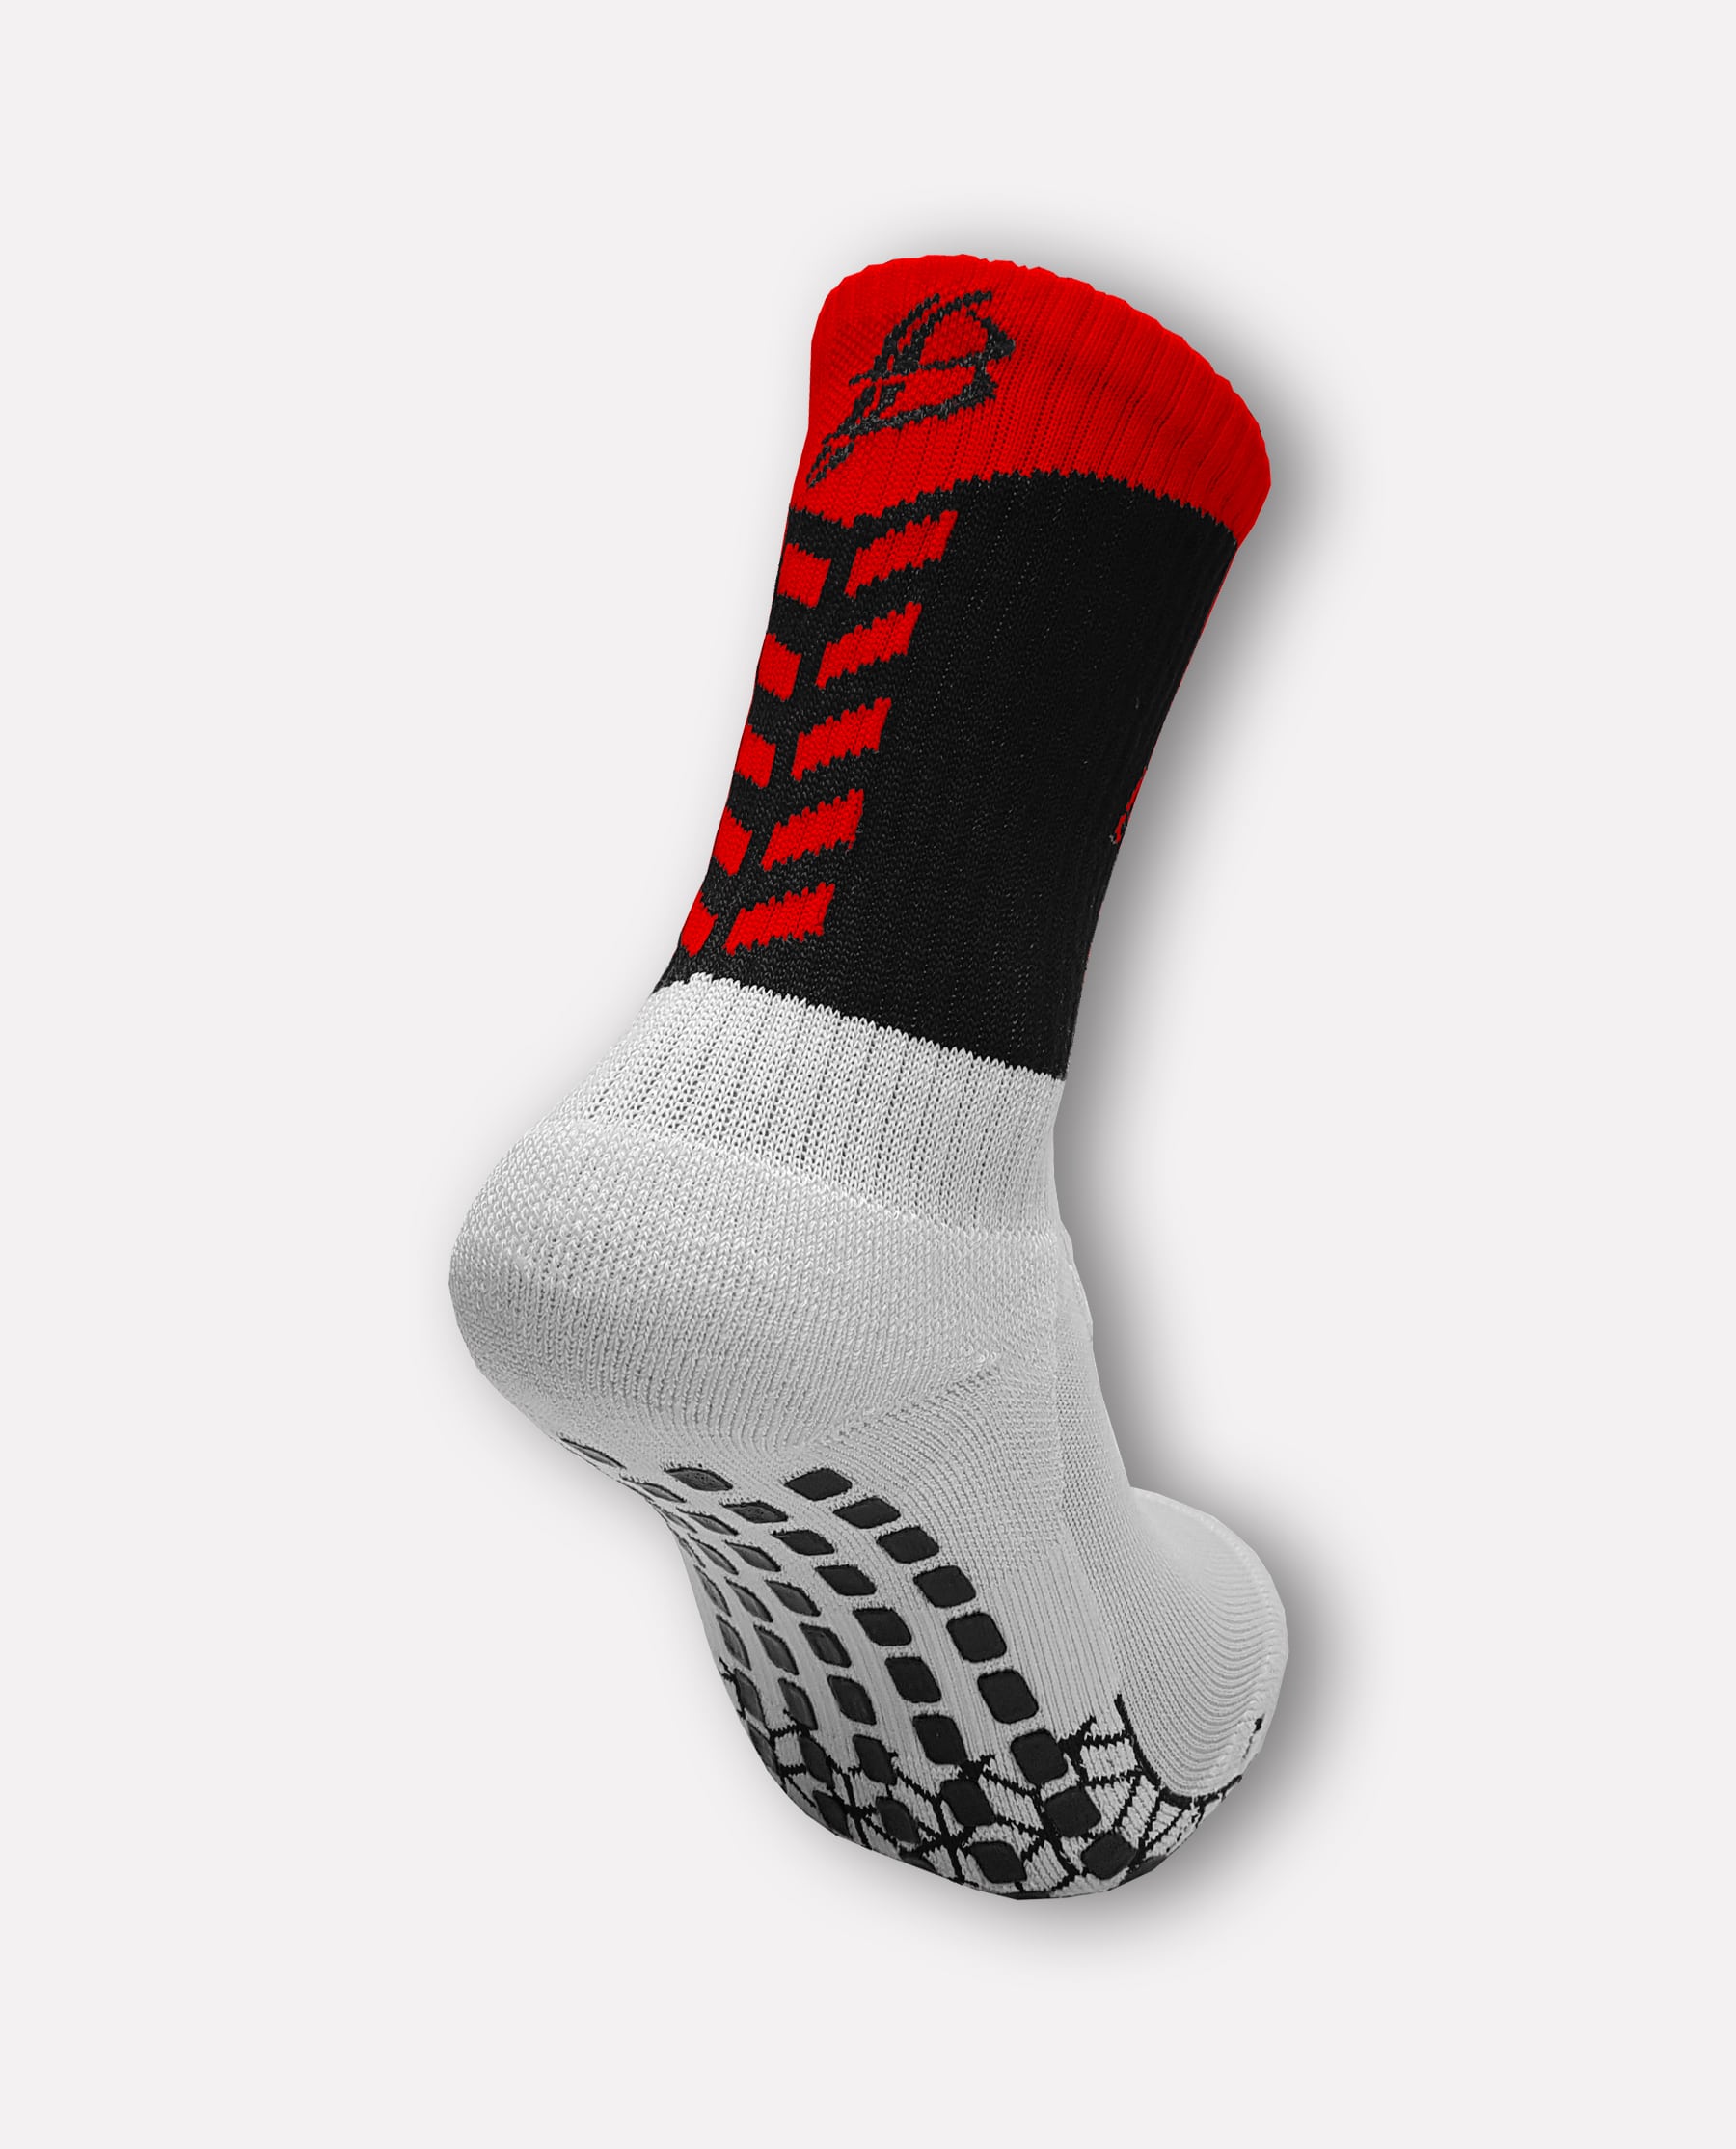 Miniz Chevron Socks Black/Red